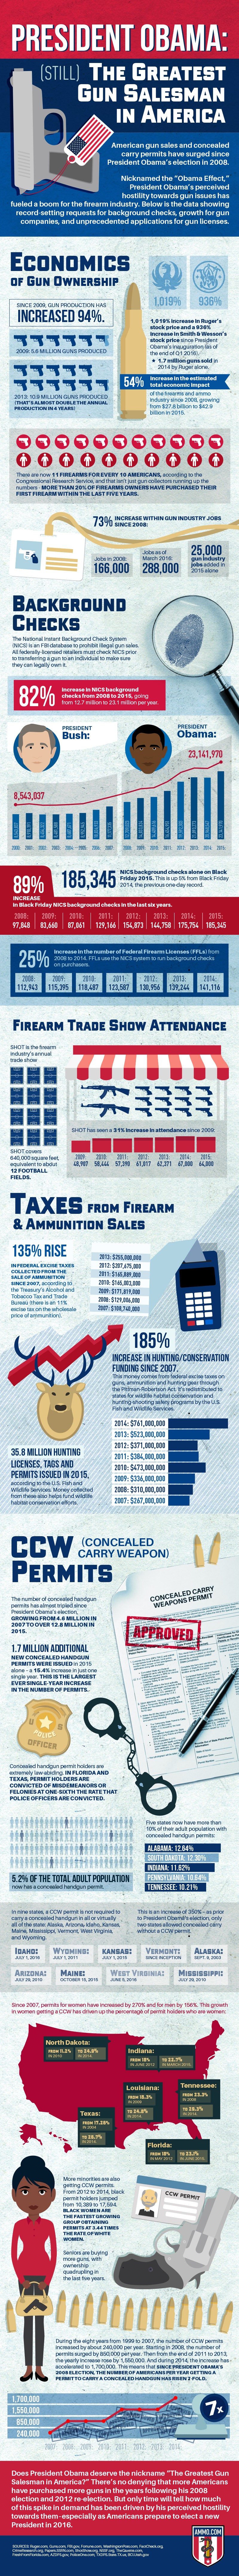 http://d1w4q6ldc8l0qo.cloudfront.net/media/images/infographics/Obama-Still-Greatest-Gun-Salesman-in-America-Infographic.jpg